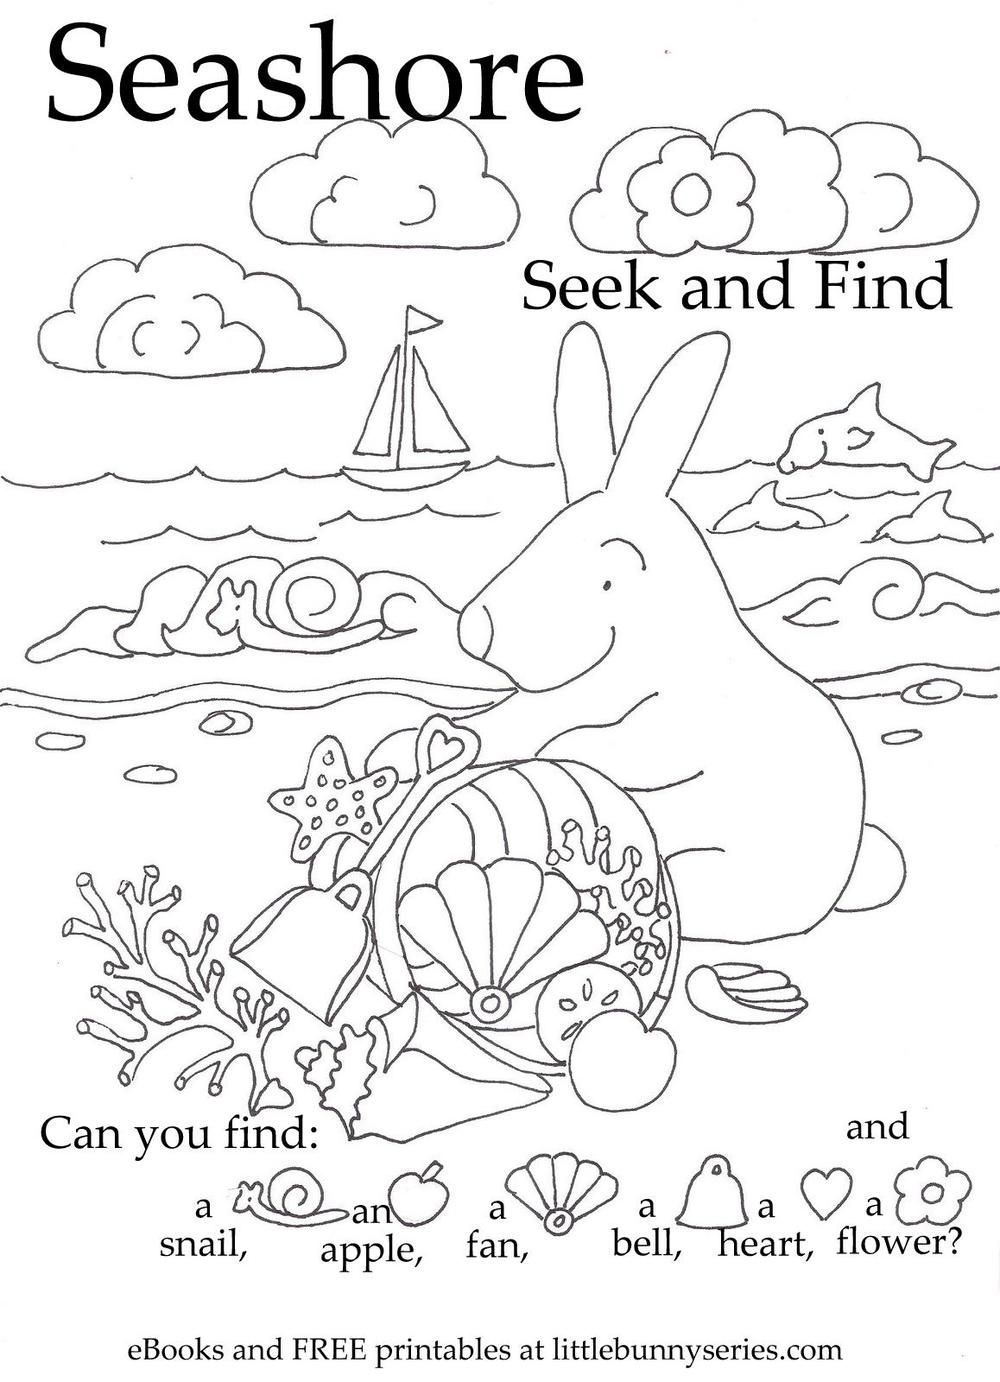 seek-and-find-coloring-pages-at-getcolorings-free-printable